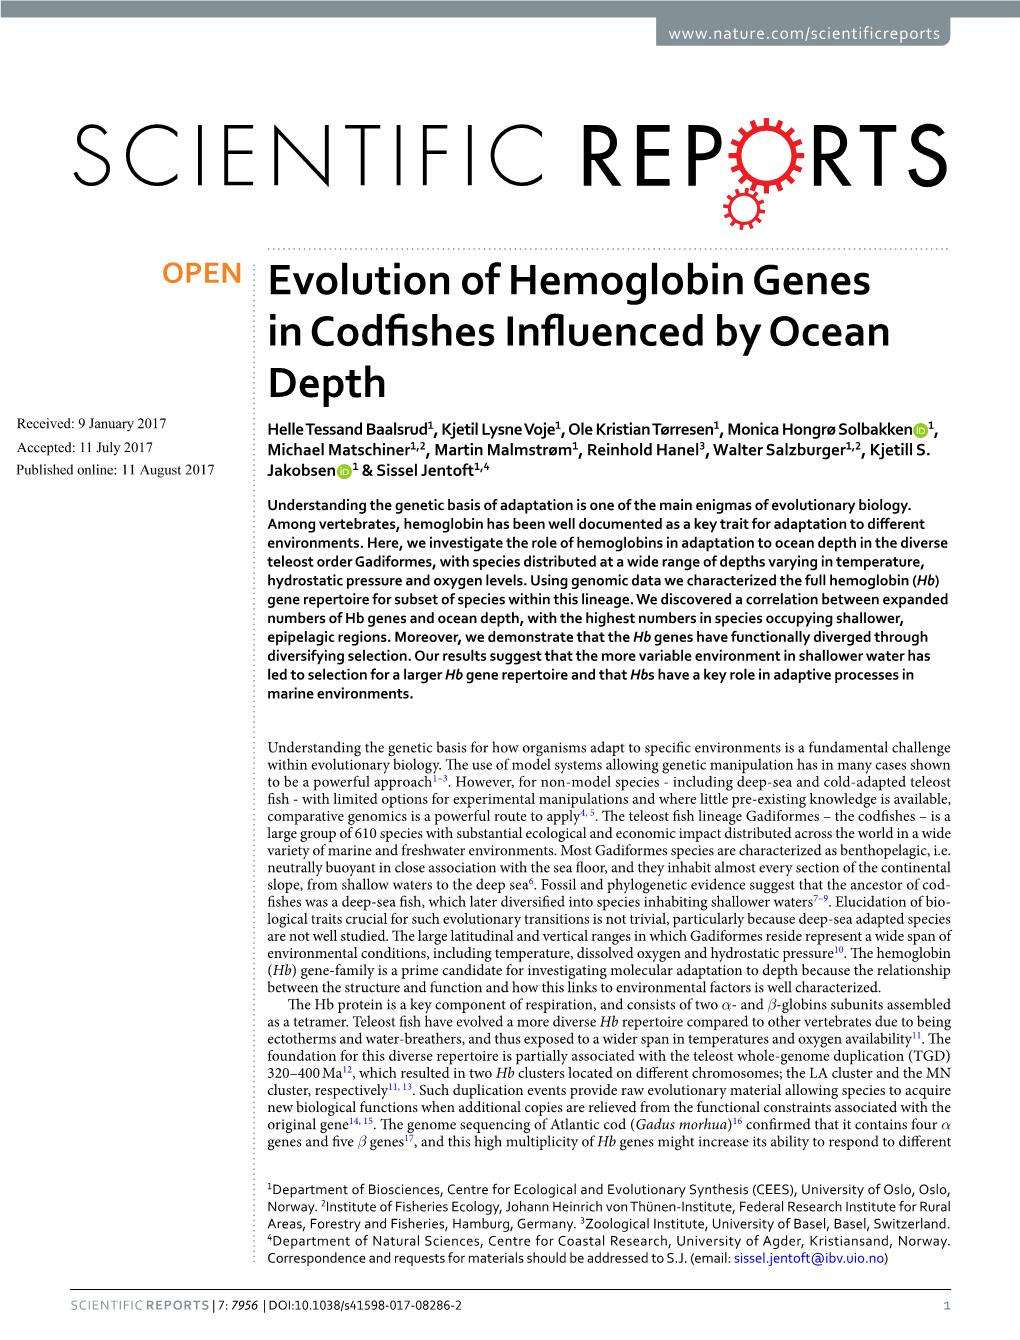 Evolution of Hemoglobin Genes in Codfishes